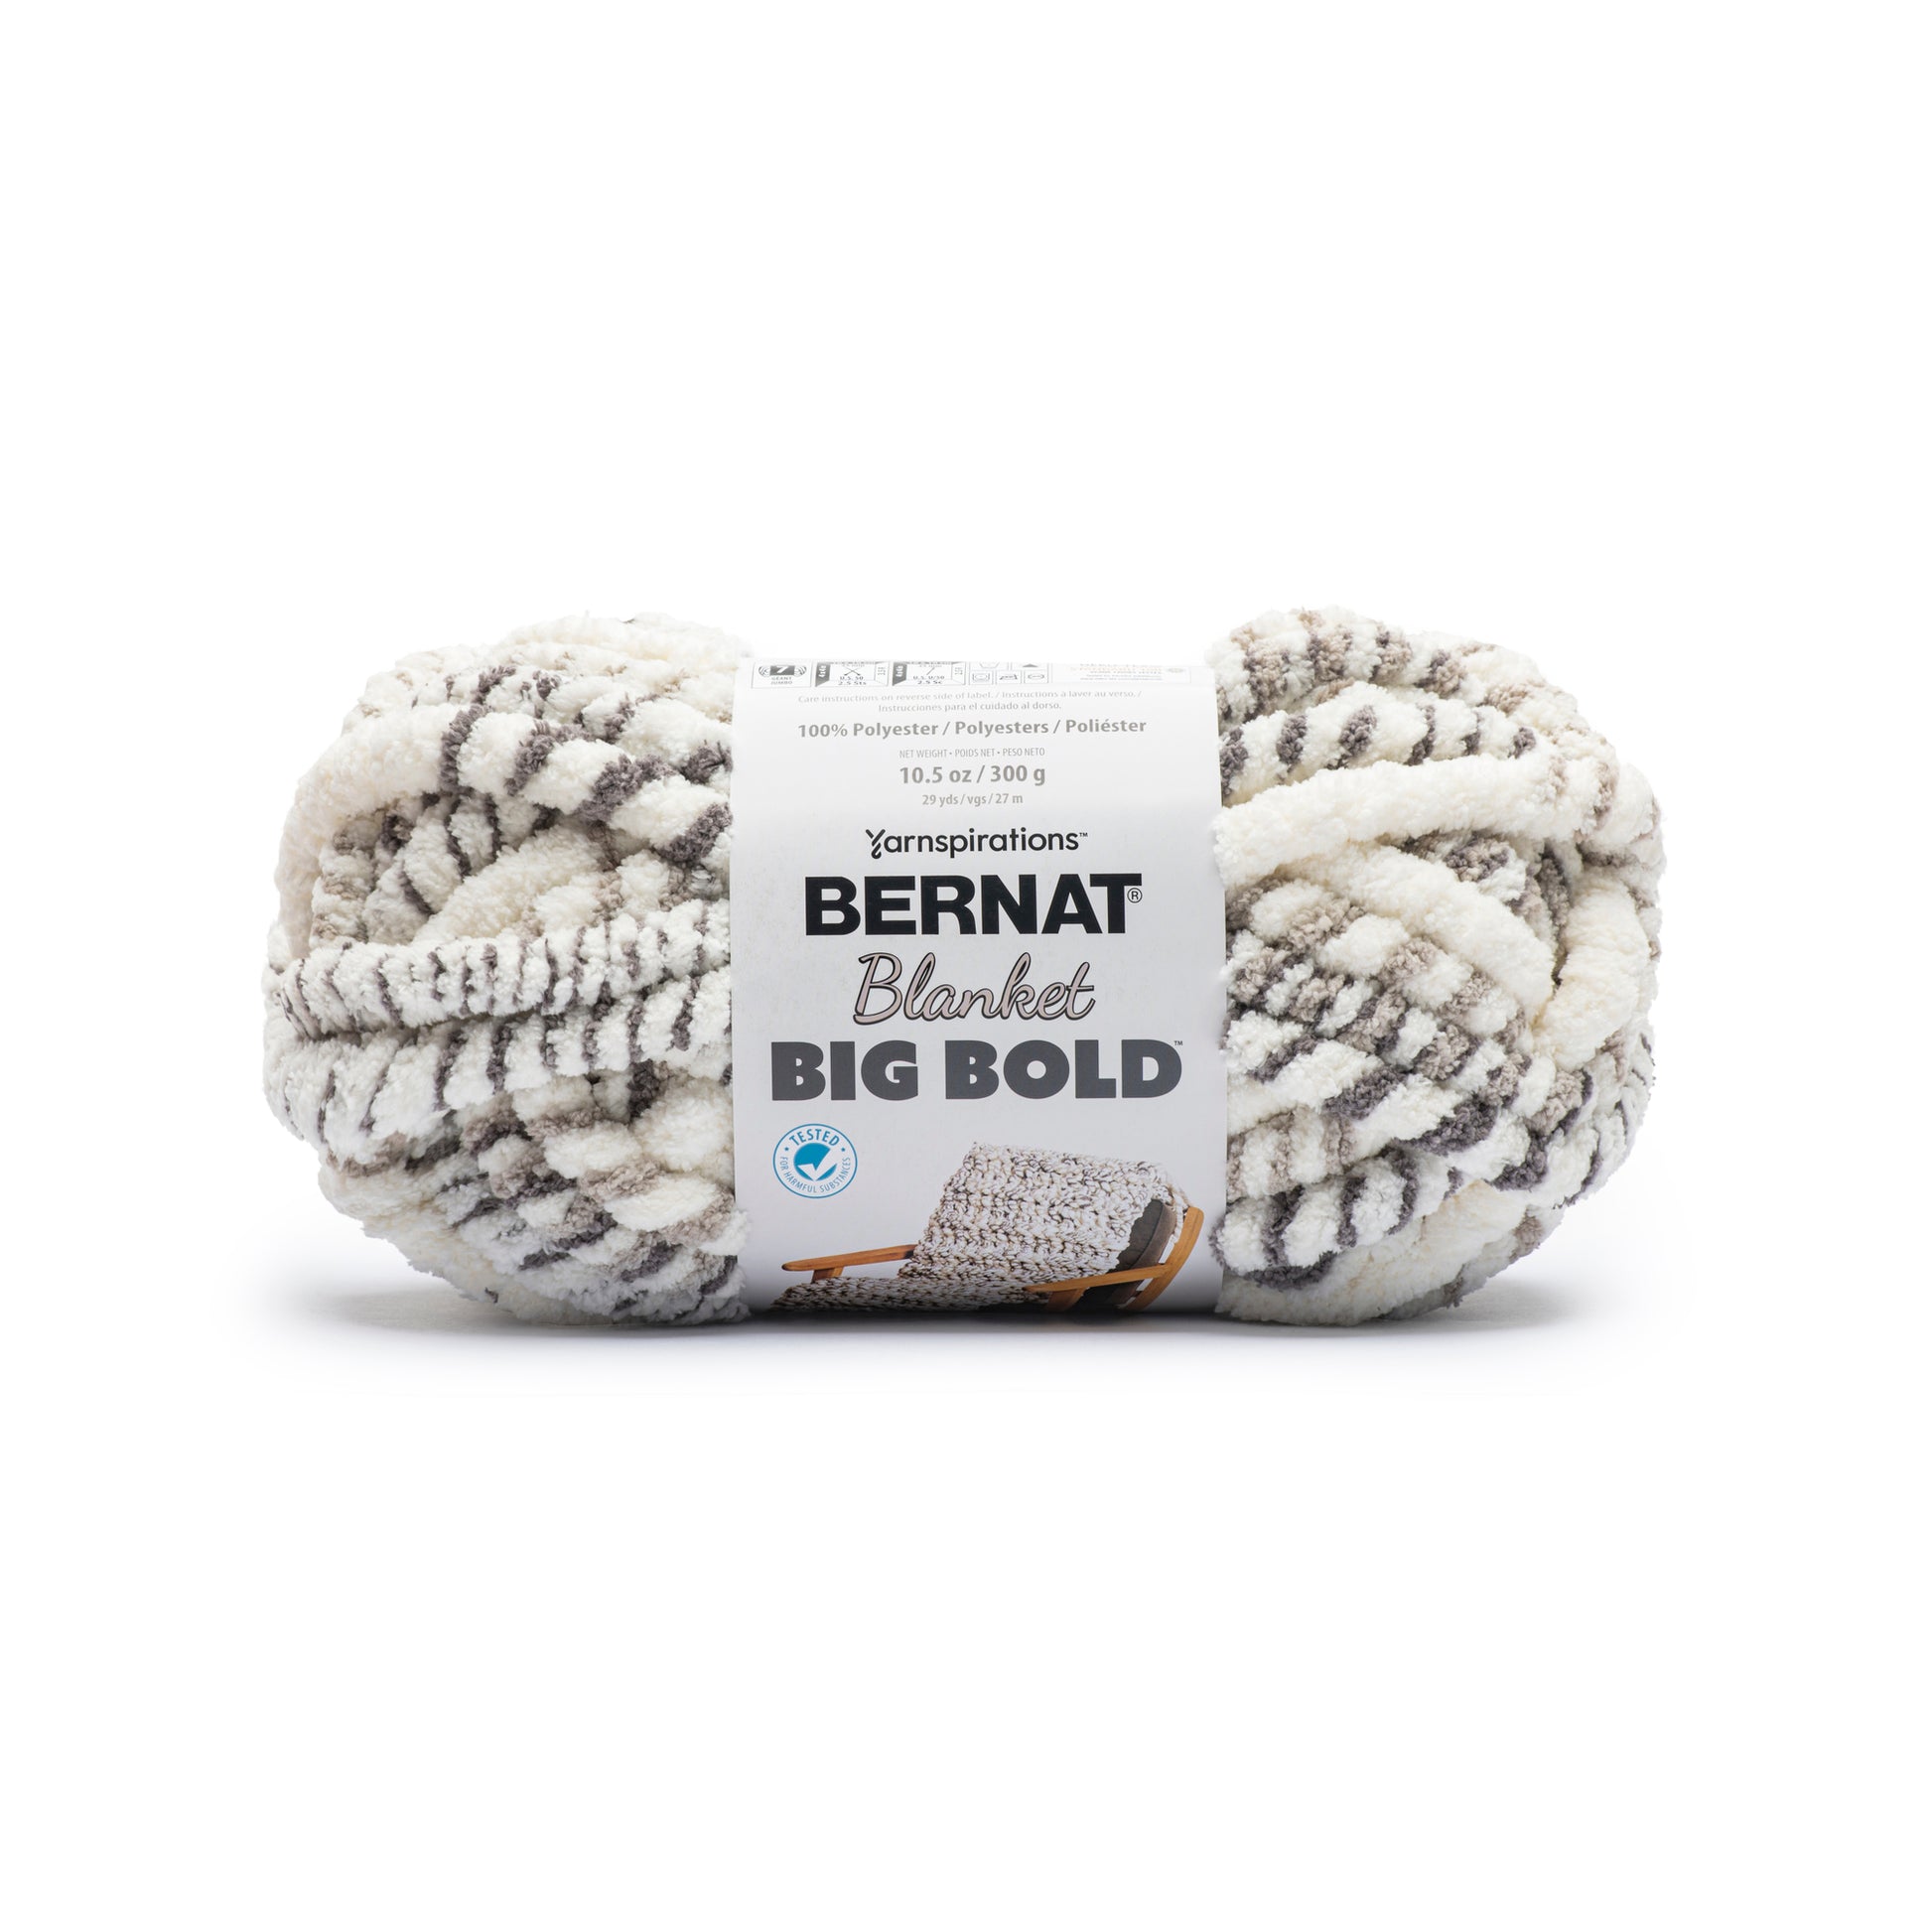 Bernat Blanket Big Bold Yarn (300g/10.5oz)